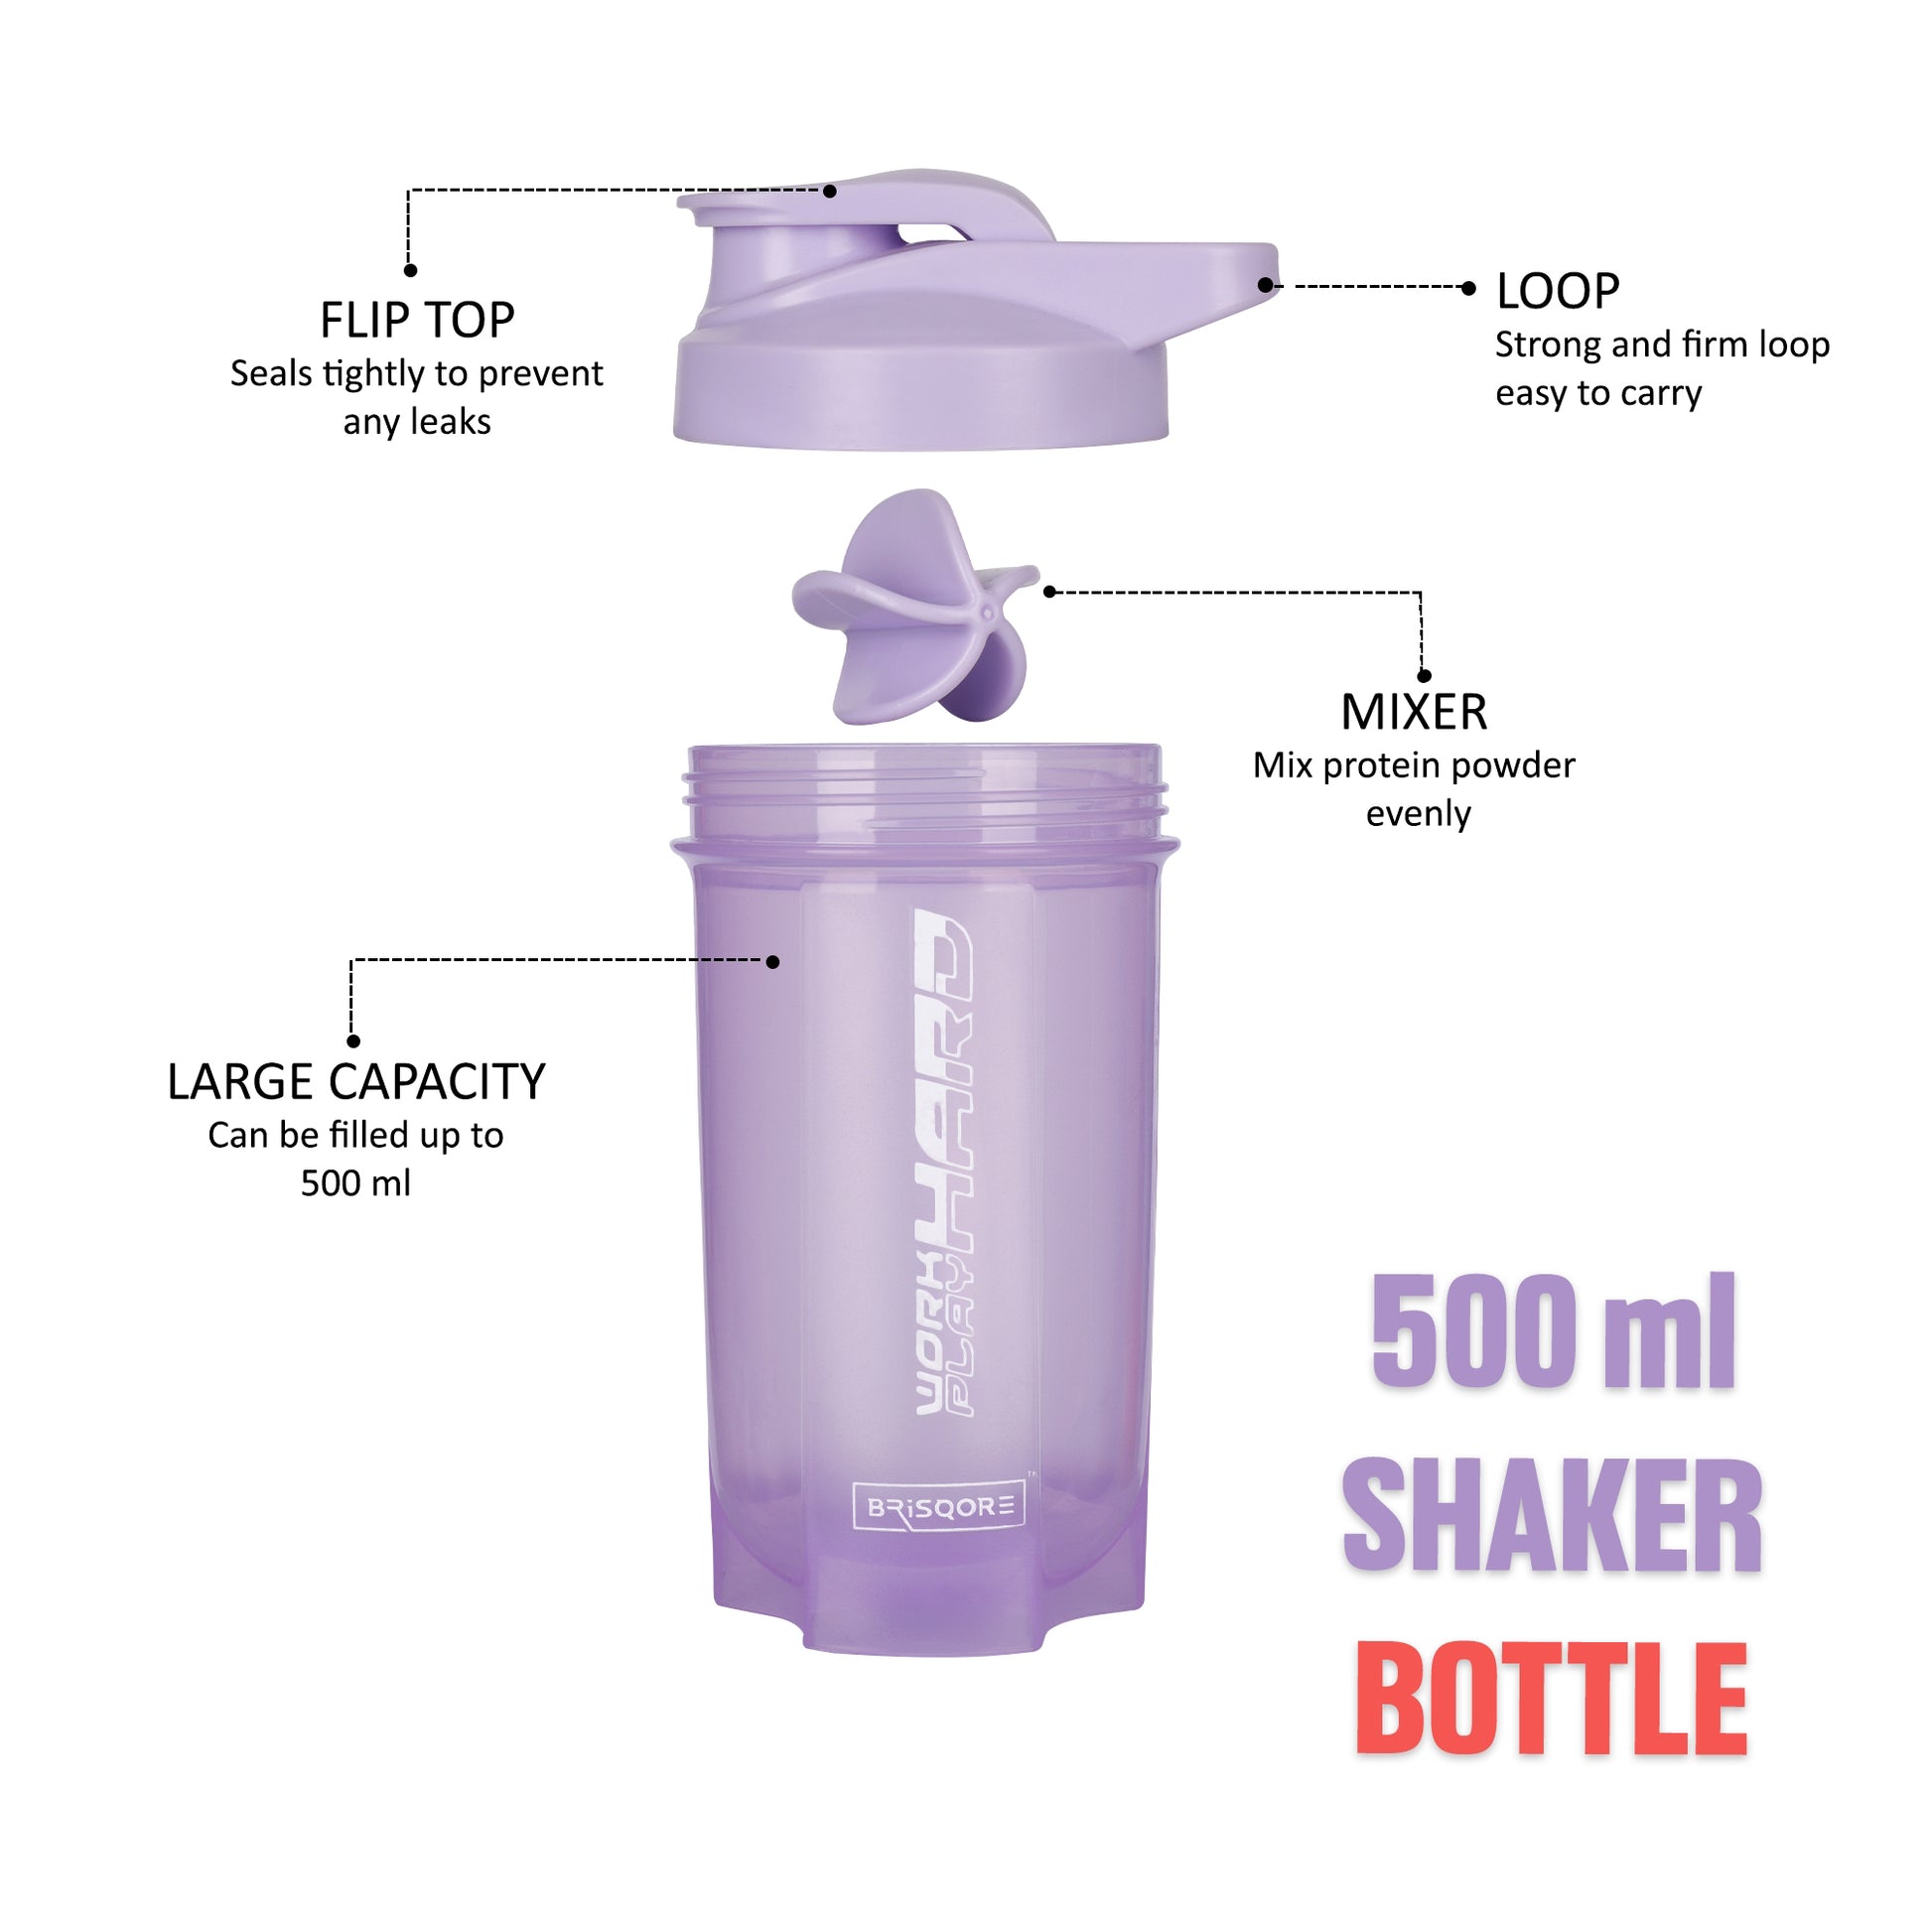 Nutrigize Brisqore Protein Shaker Bottle 500ml